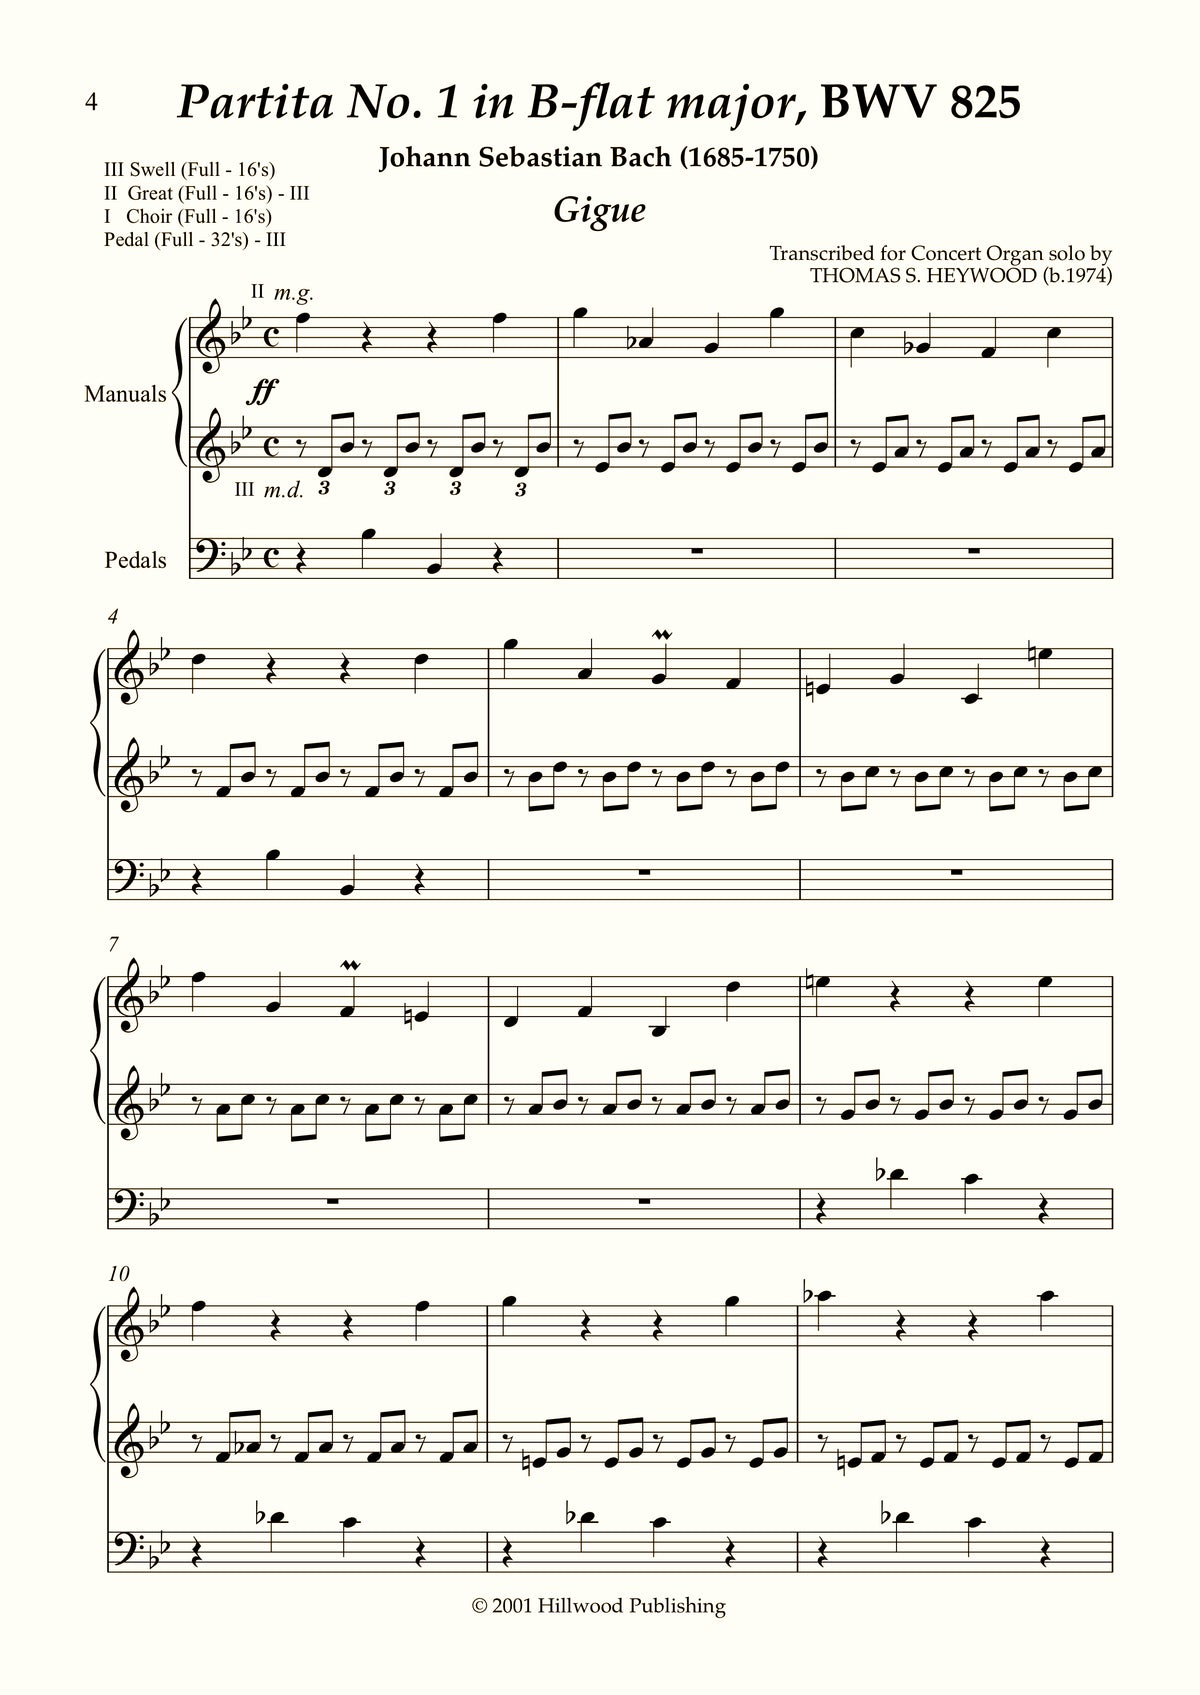 Bach/Heywood - Gigue from Partita No. 1 in B-flat major, BWV 825 (Score) | Thomas Heywood | Concert Organ International